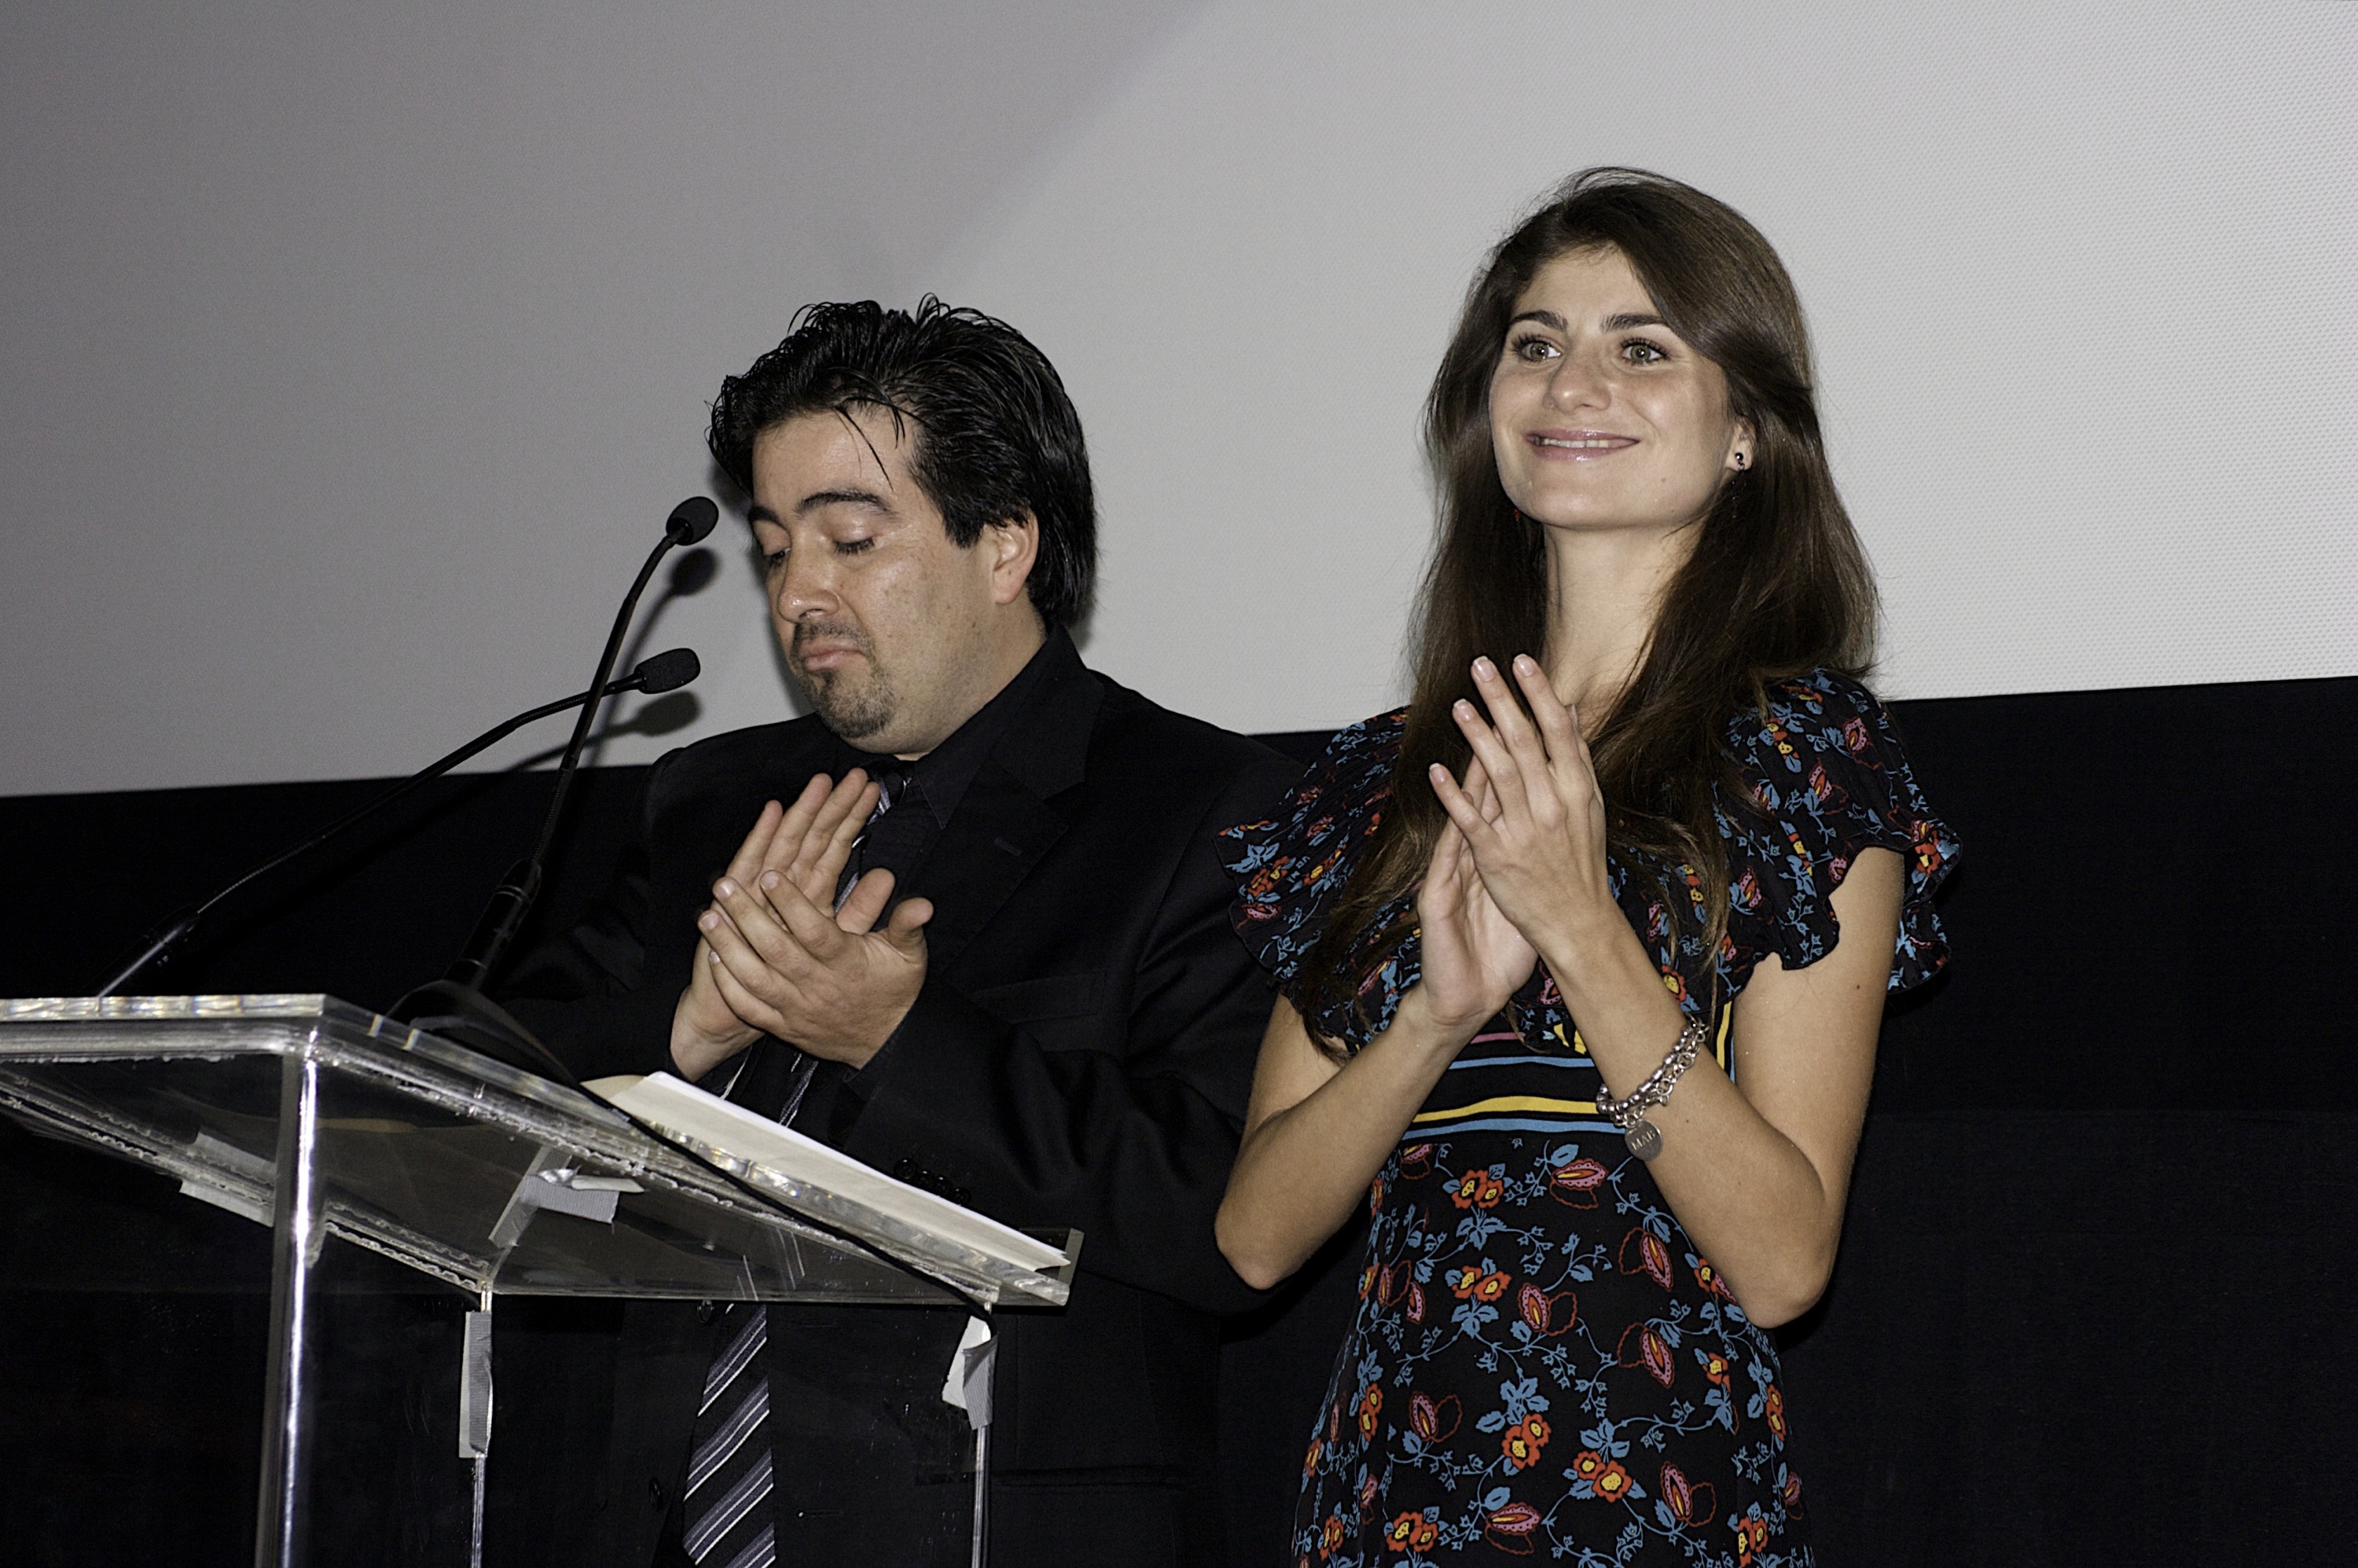 Pedro Araneda (Left) and Actress María Aura during the presentation of the AMCI's Awards.